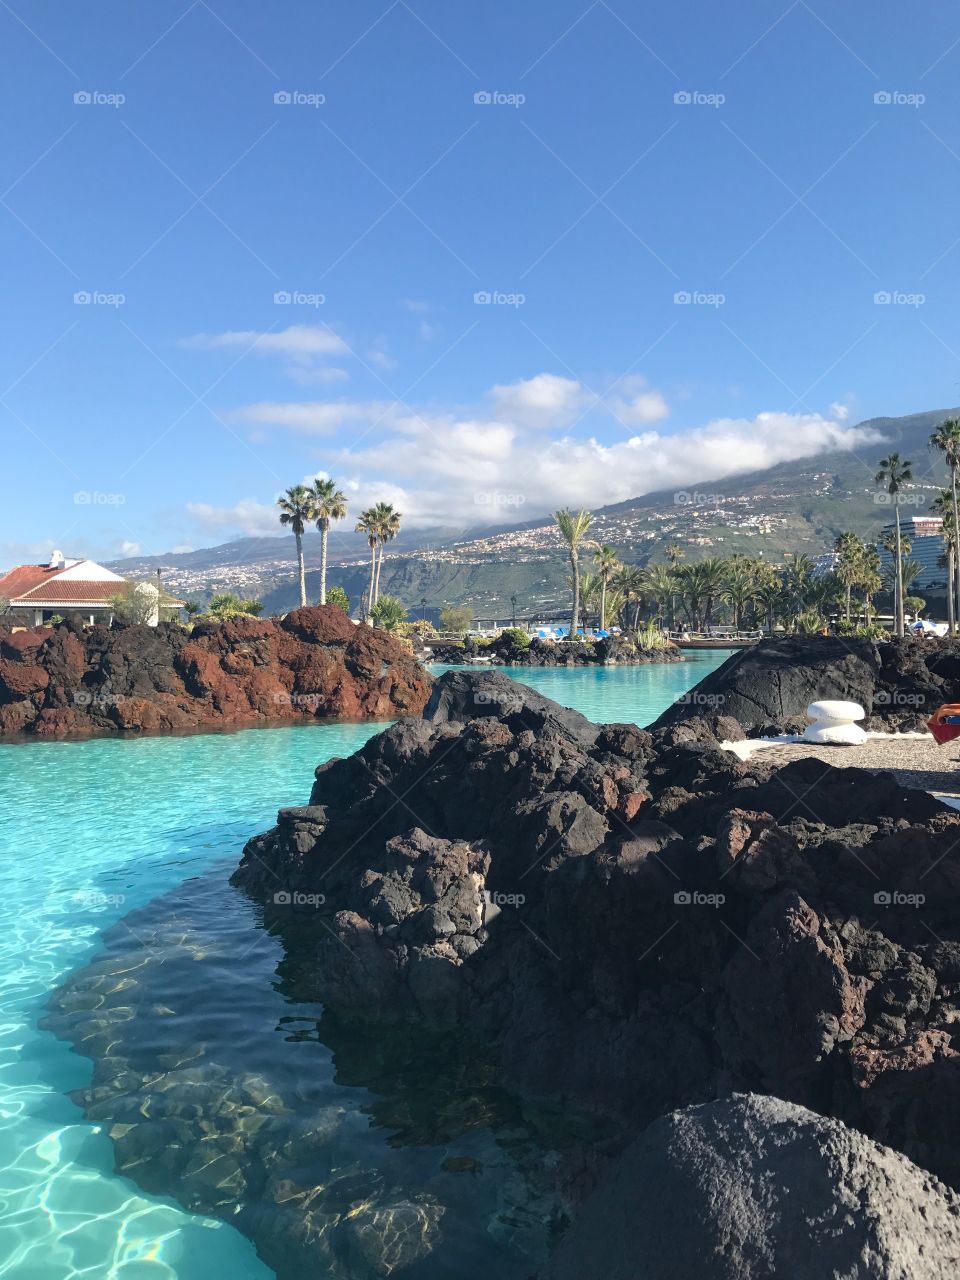 Pool, Tenerife